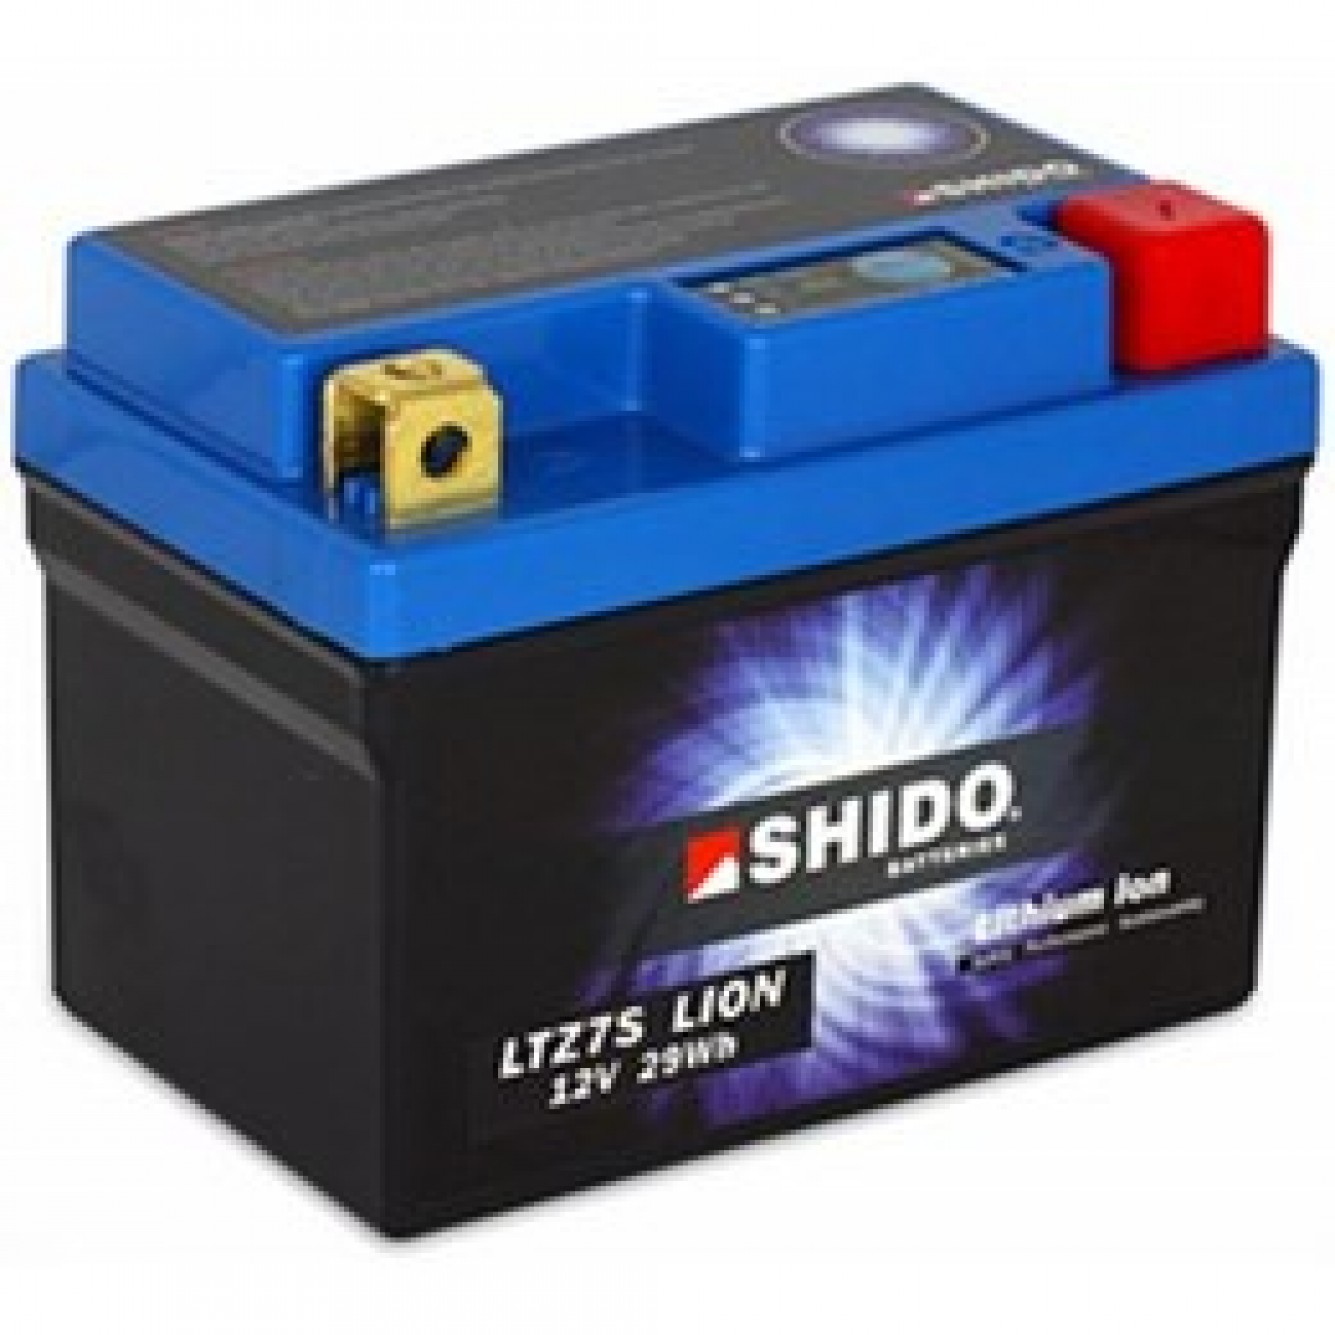 Shido | LTZ7S Lithium Accu